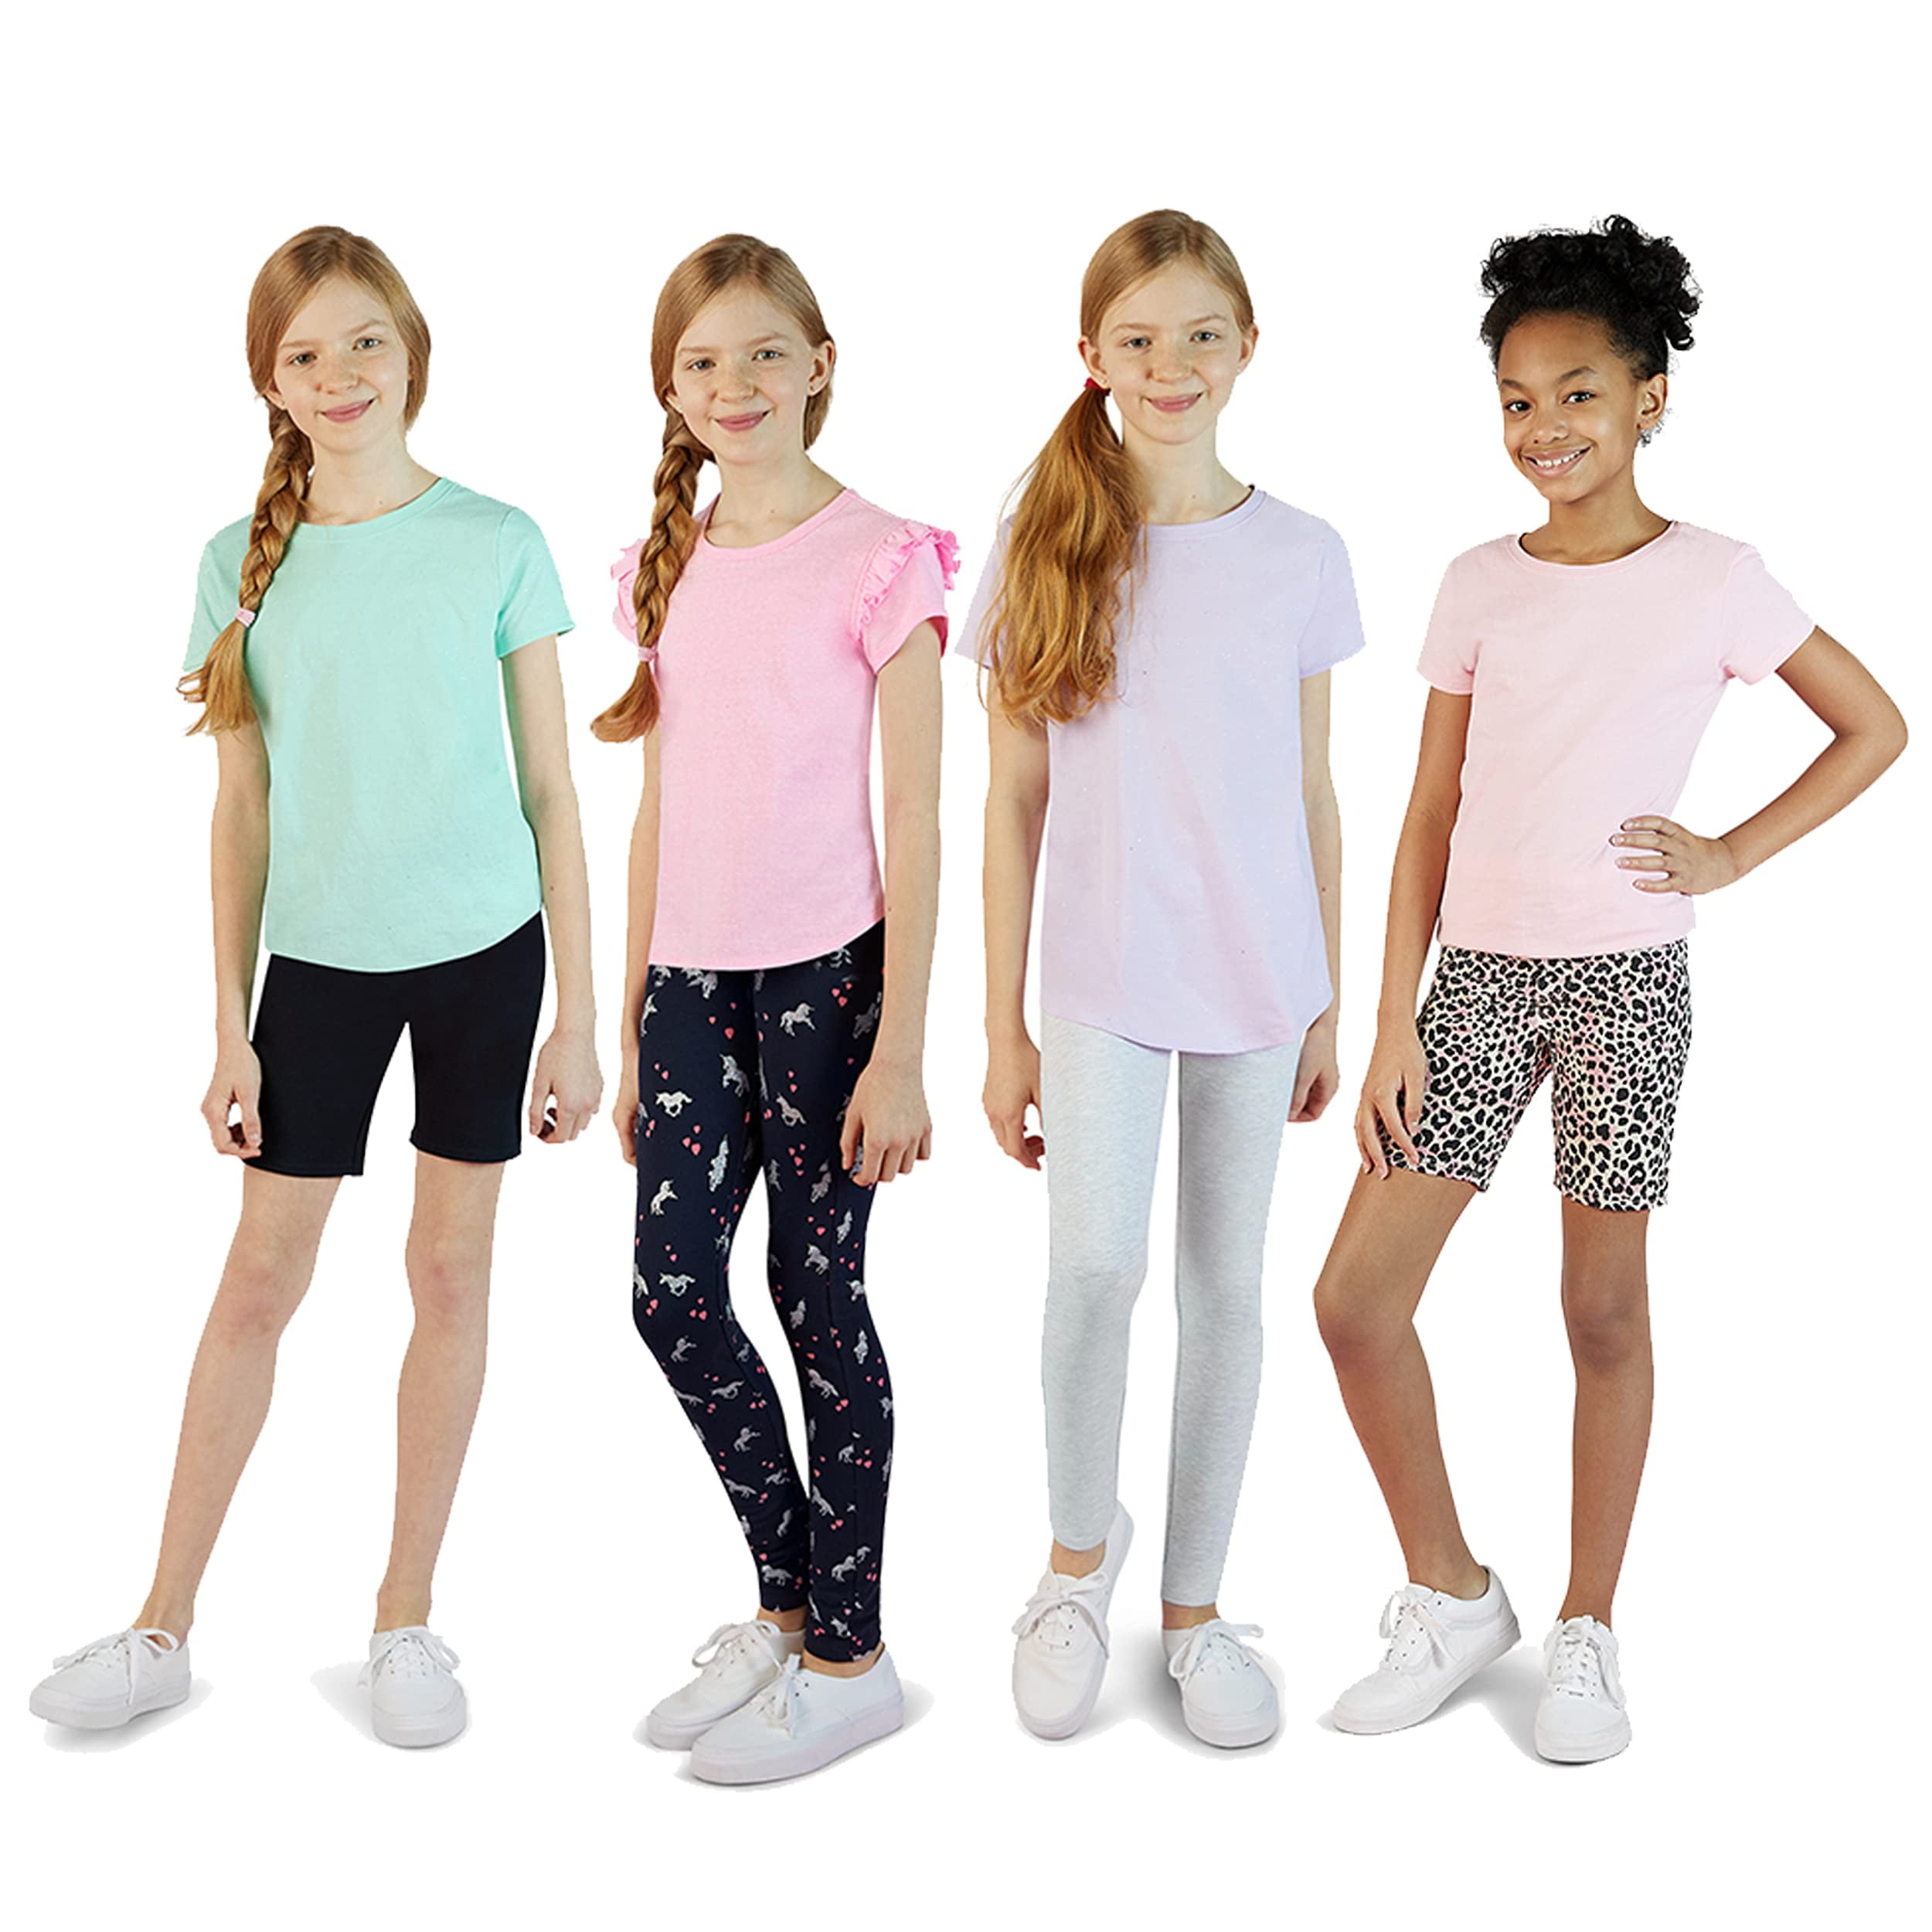 Buy Fablab Women's Ladies/Girls/Cotton Lycra Churidar Leggings Combo Pack  of 10  (Freesize,Black,White,Green,Red,Orange,Yellow,Pink,Blue,Purple,SkyBlue). at  Amazon.in